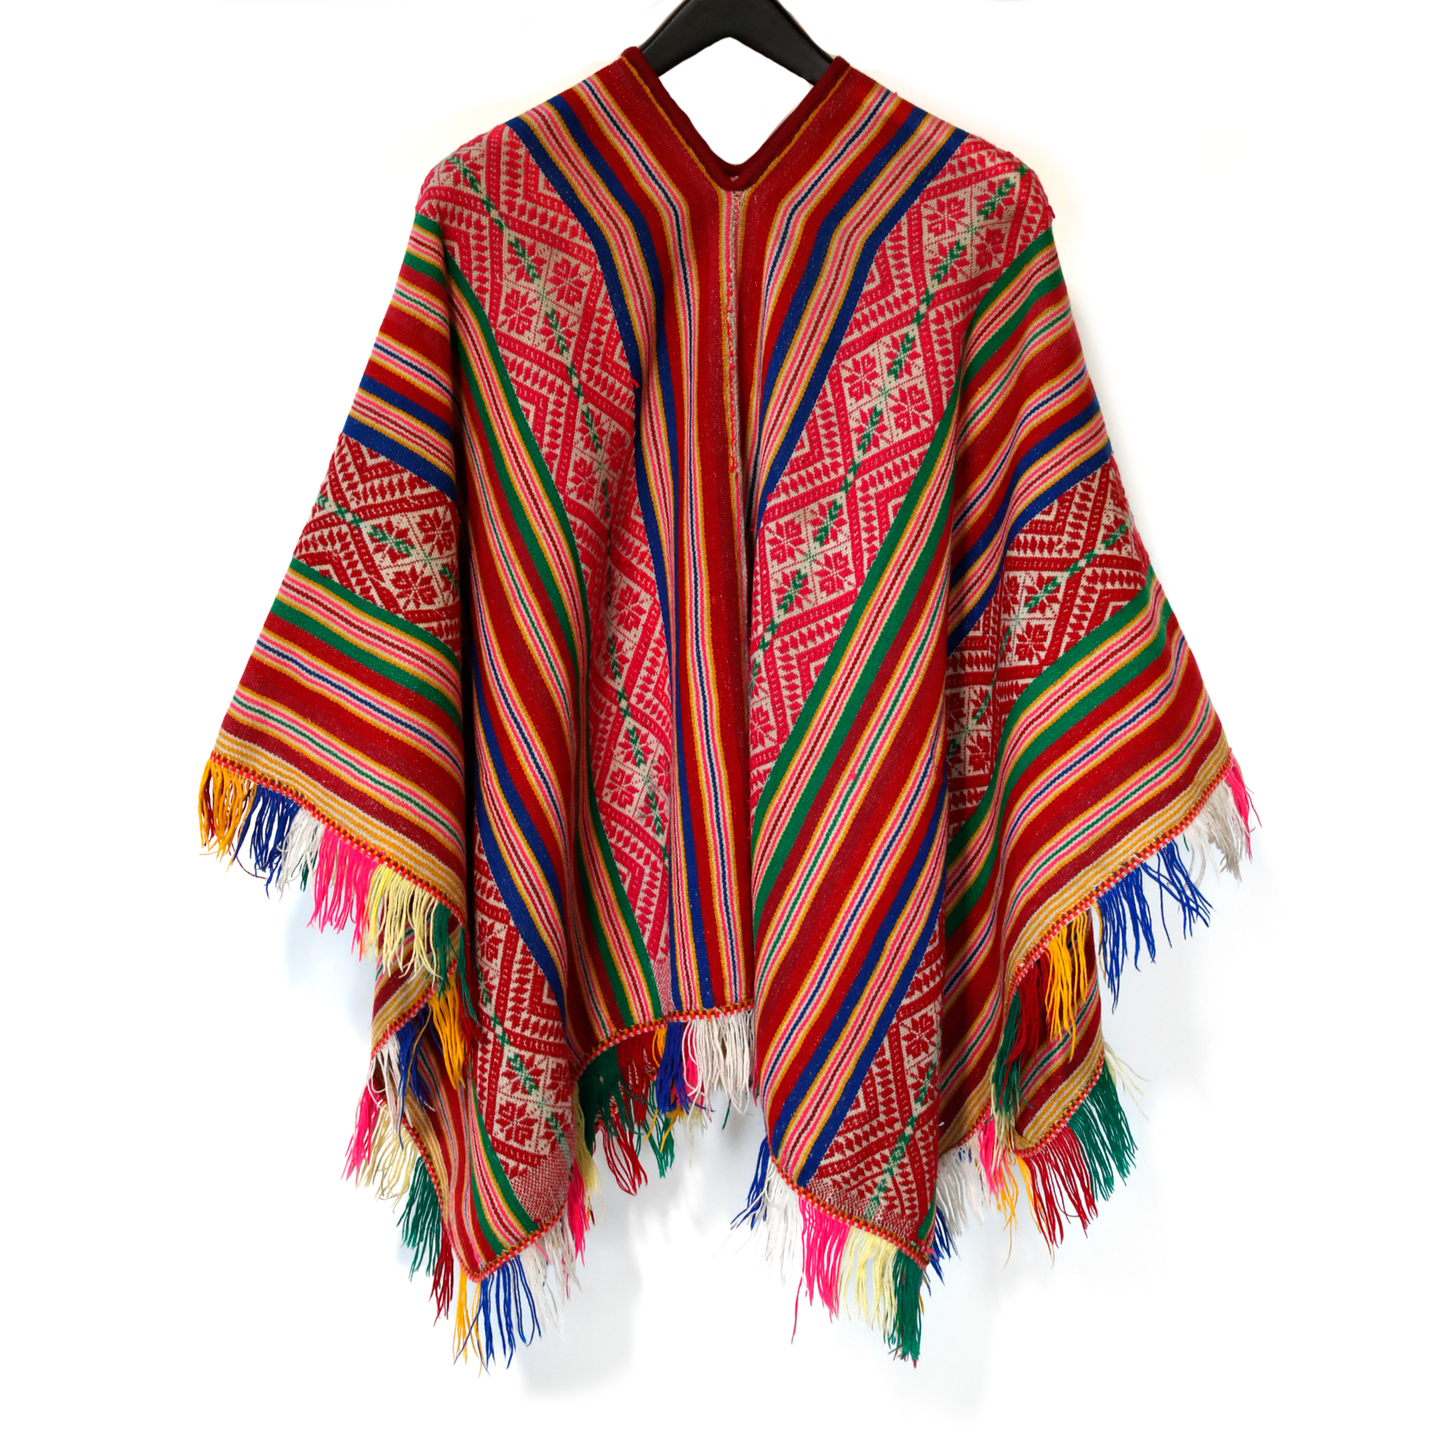 Intiearth Peruvian Poncho colorful textiles, beach cover up, fashion apparel